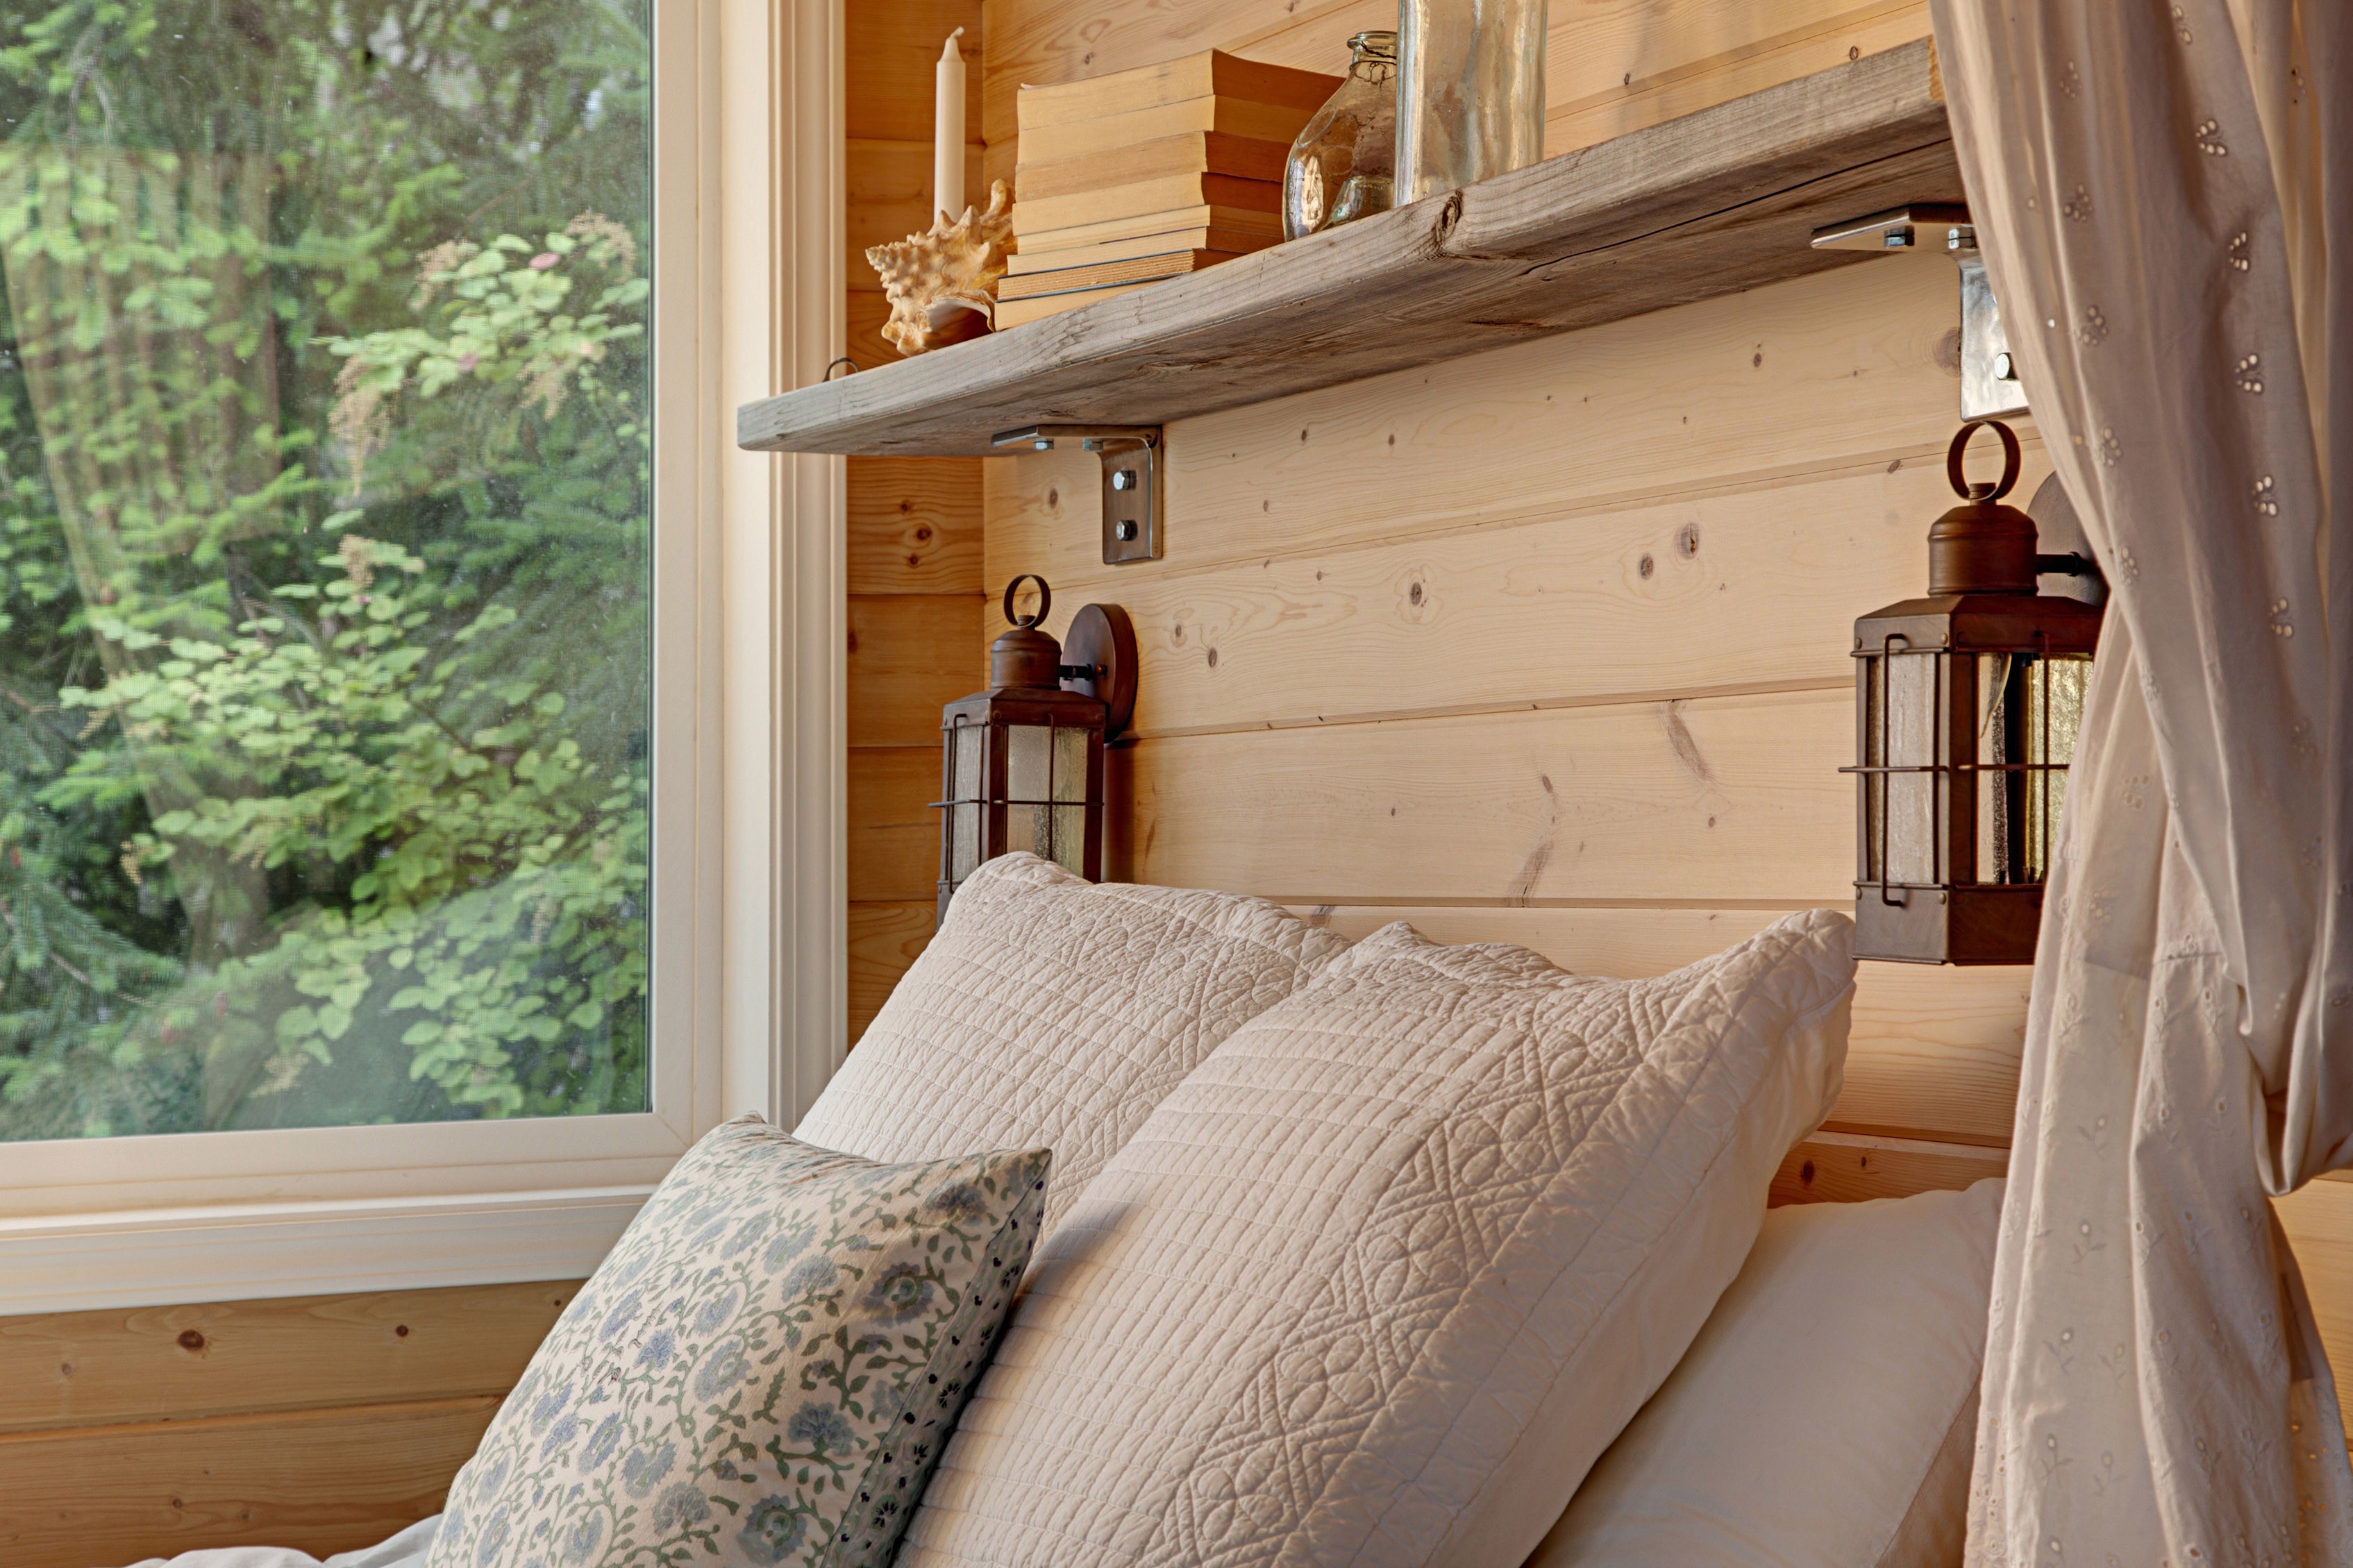 5 Beautiful Decorative Shelf Ideas to Brighten Up Your Walls - Porch Advice